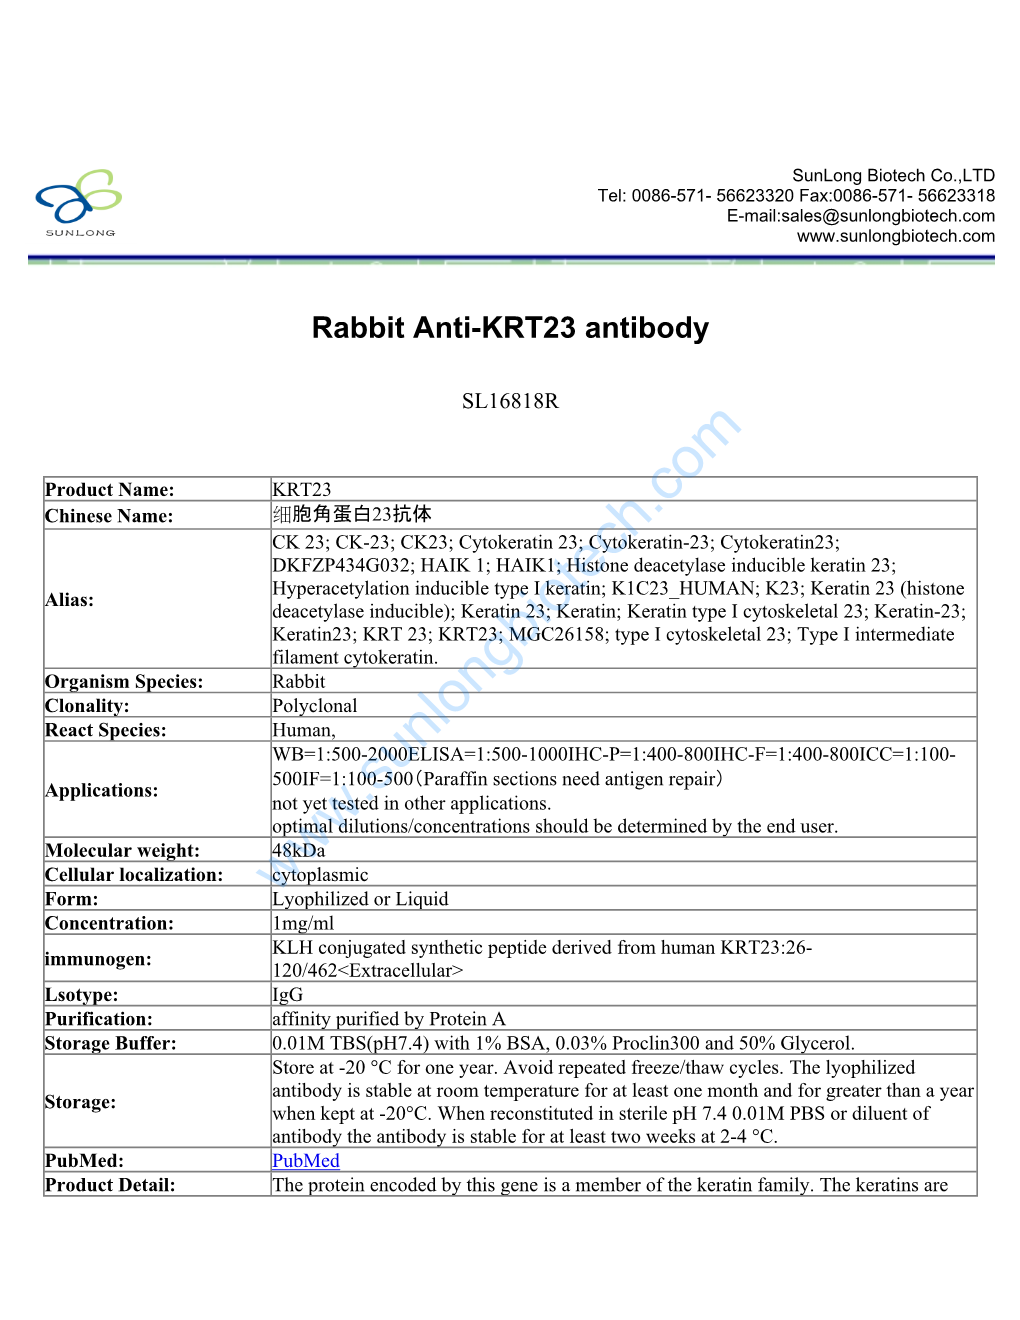 Rabbit Anti-KRT23 Antibody-SL16818R